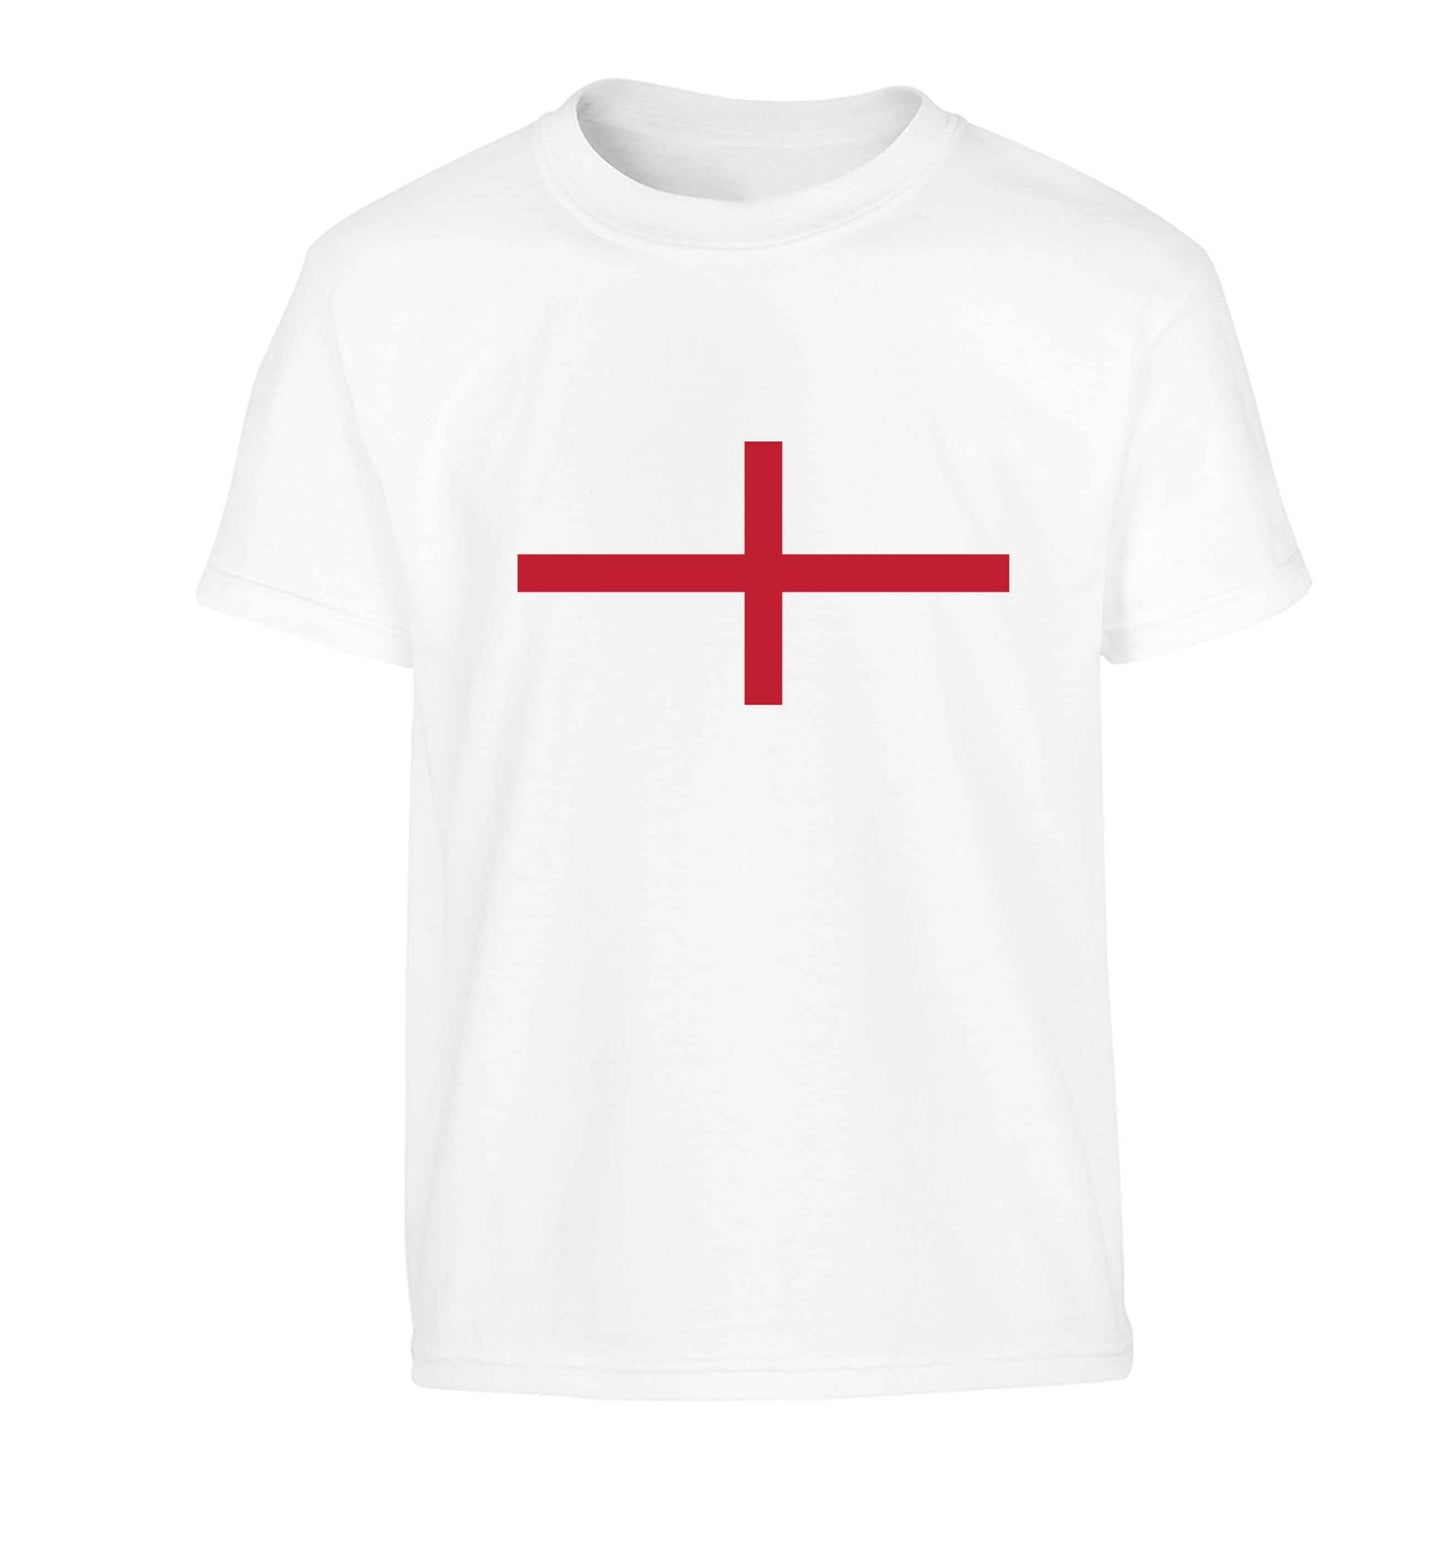 England Flag Children's white Tshirt 12-13 Years